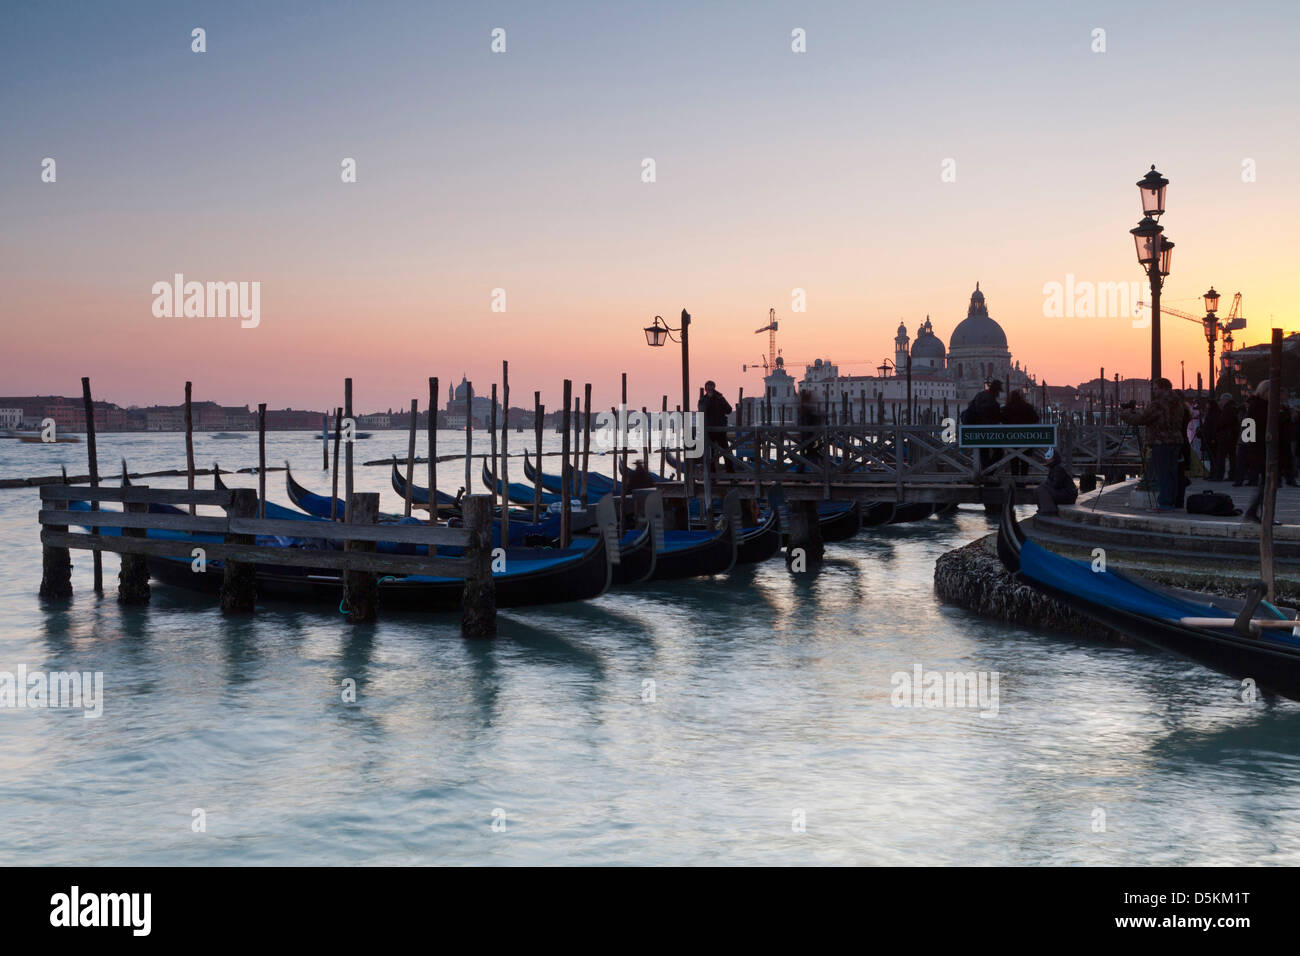 Venice at dusk city state Renaissance UNESCO world heritage site. Gondola boats moored on the water. Romantic scene. Stock Photo